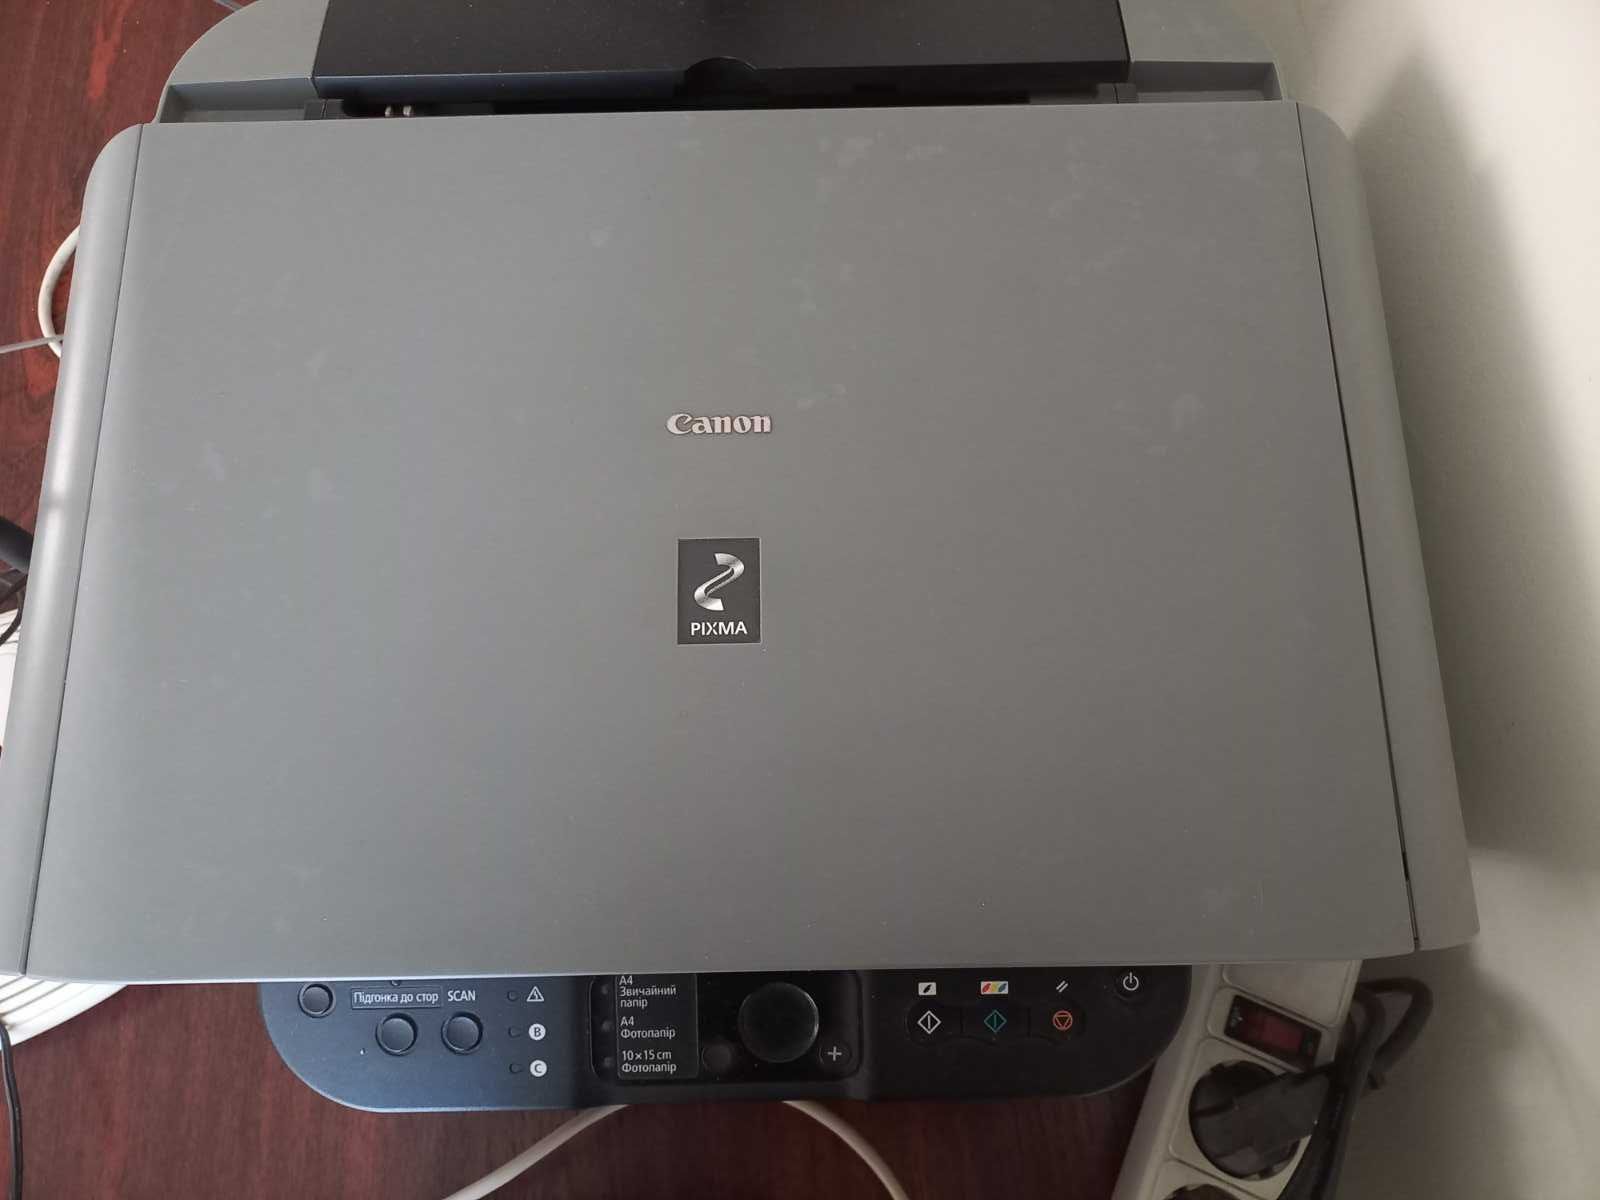 Принтер HP deskjet f4180 i Canon MP160